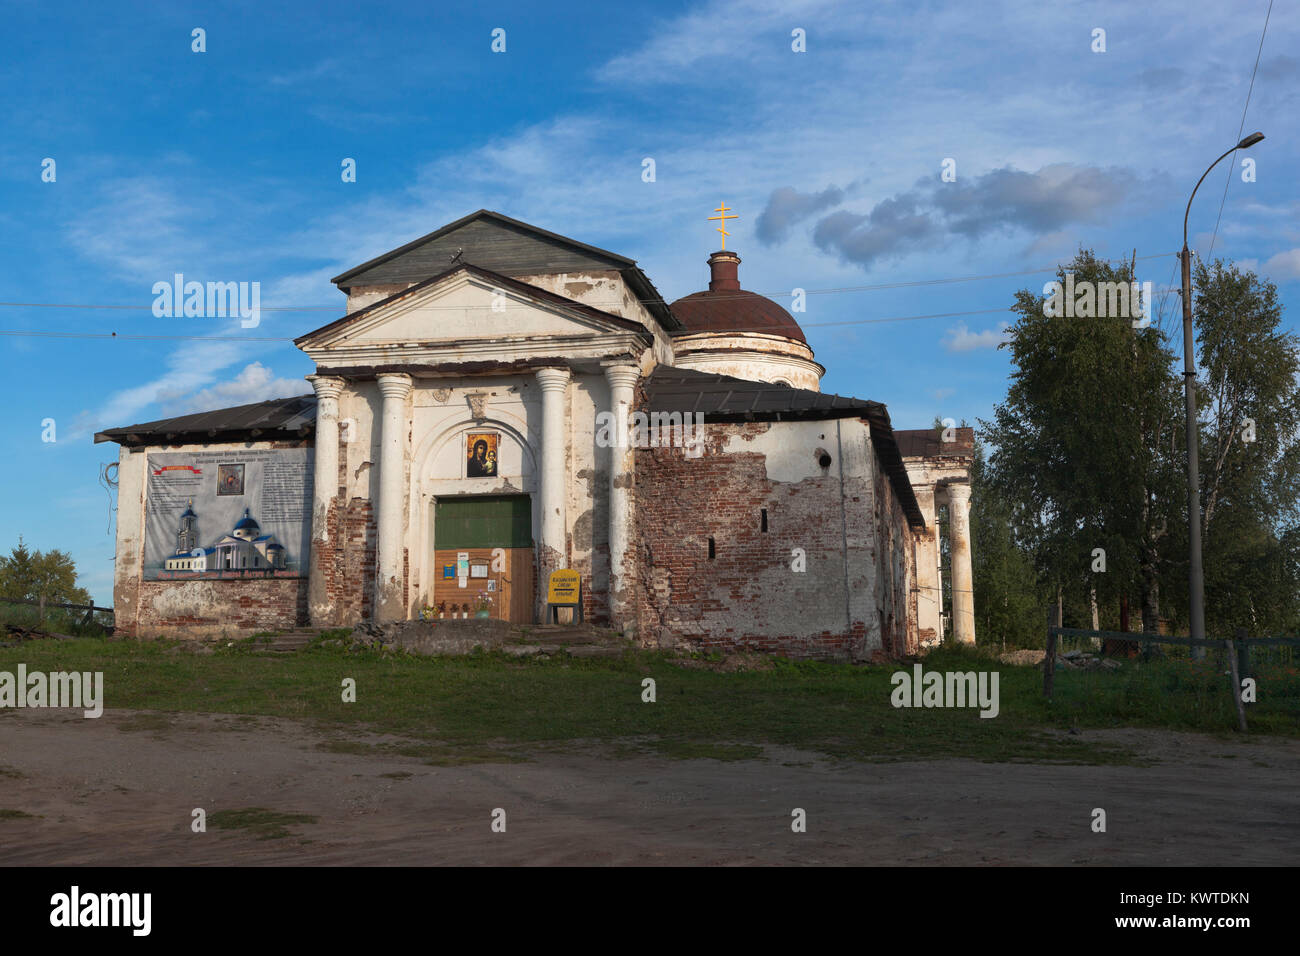 Kirillov, Vologda region, Russia - August 9, 2015: Church of the Kazan Icon of the Theotokos in the town Kirillov, Vologda region Stock Photo